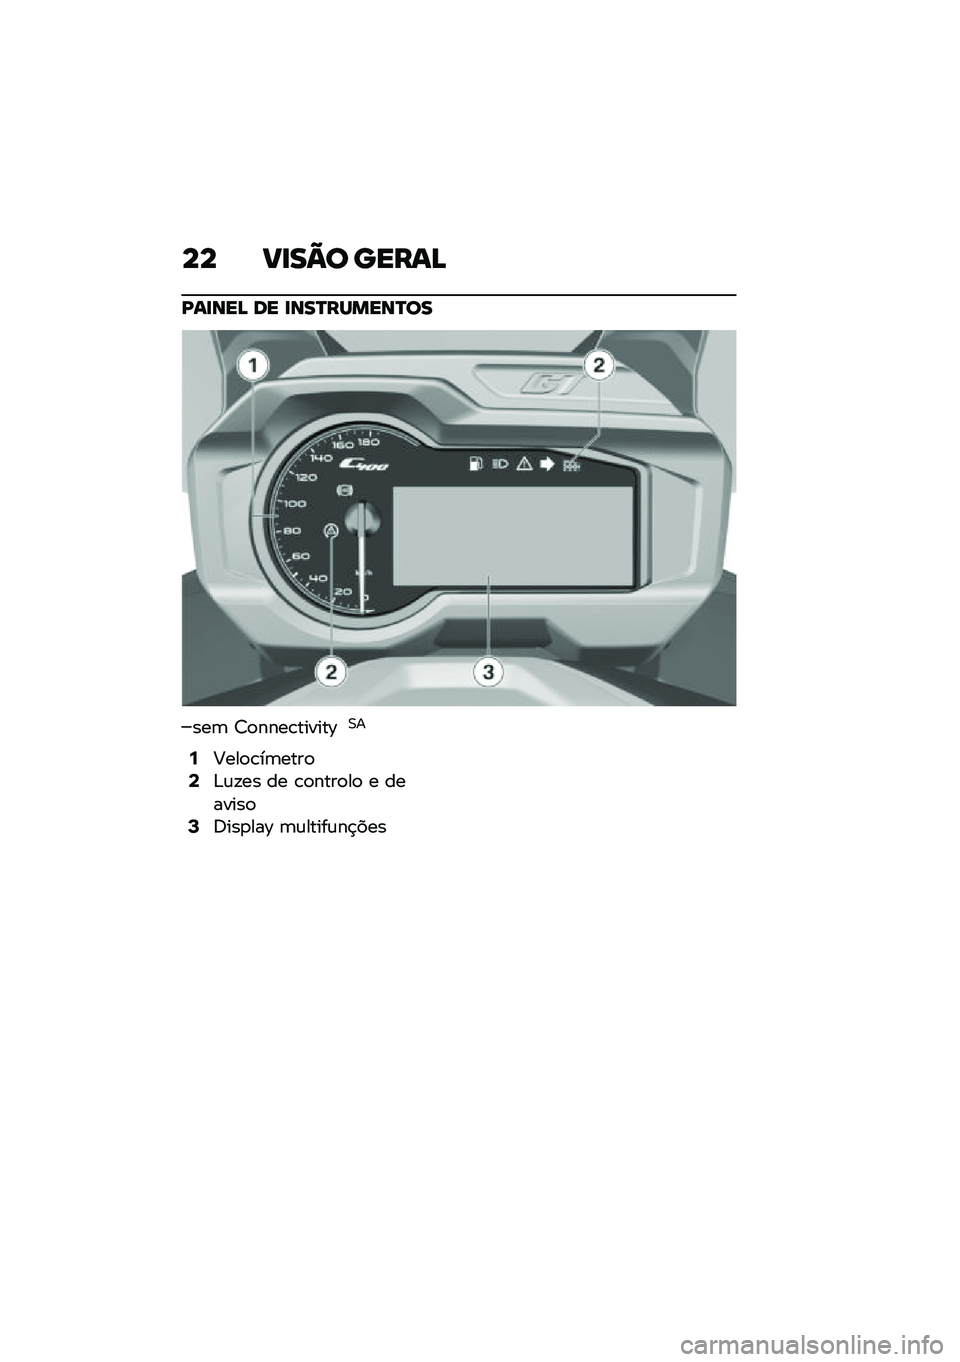 BMW MOTORRAD C 400 GT 2020  Manual do condutor (in Portuguese) �� ��
��=� �����>
�A��
���> �� �
���P������P��
���	 �<�
����\b������D�0�
�7�@���
�\b��	����
�9�&�\f�!�� �� �\b�
����
��
 � �������
�;�6���
��